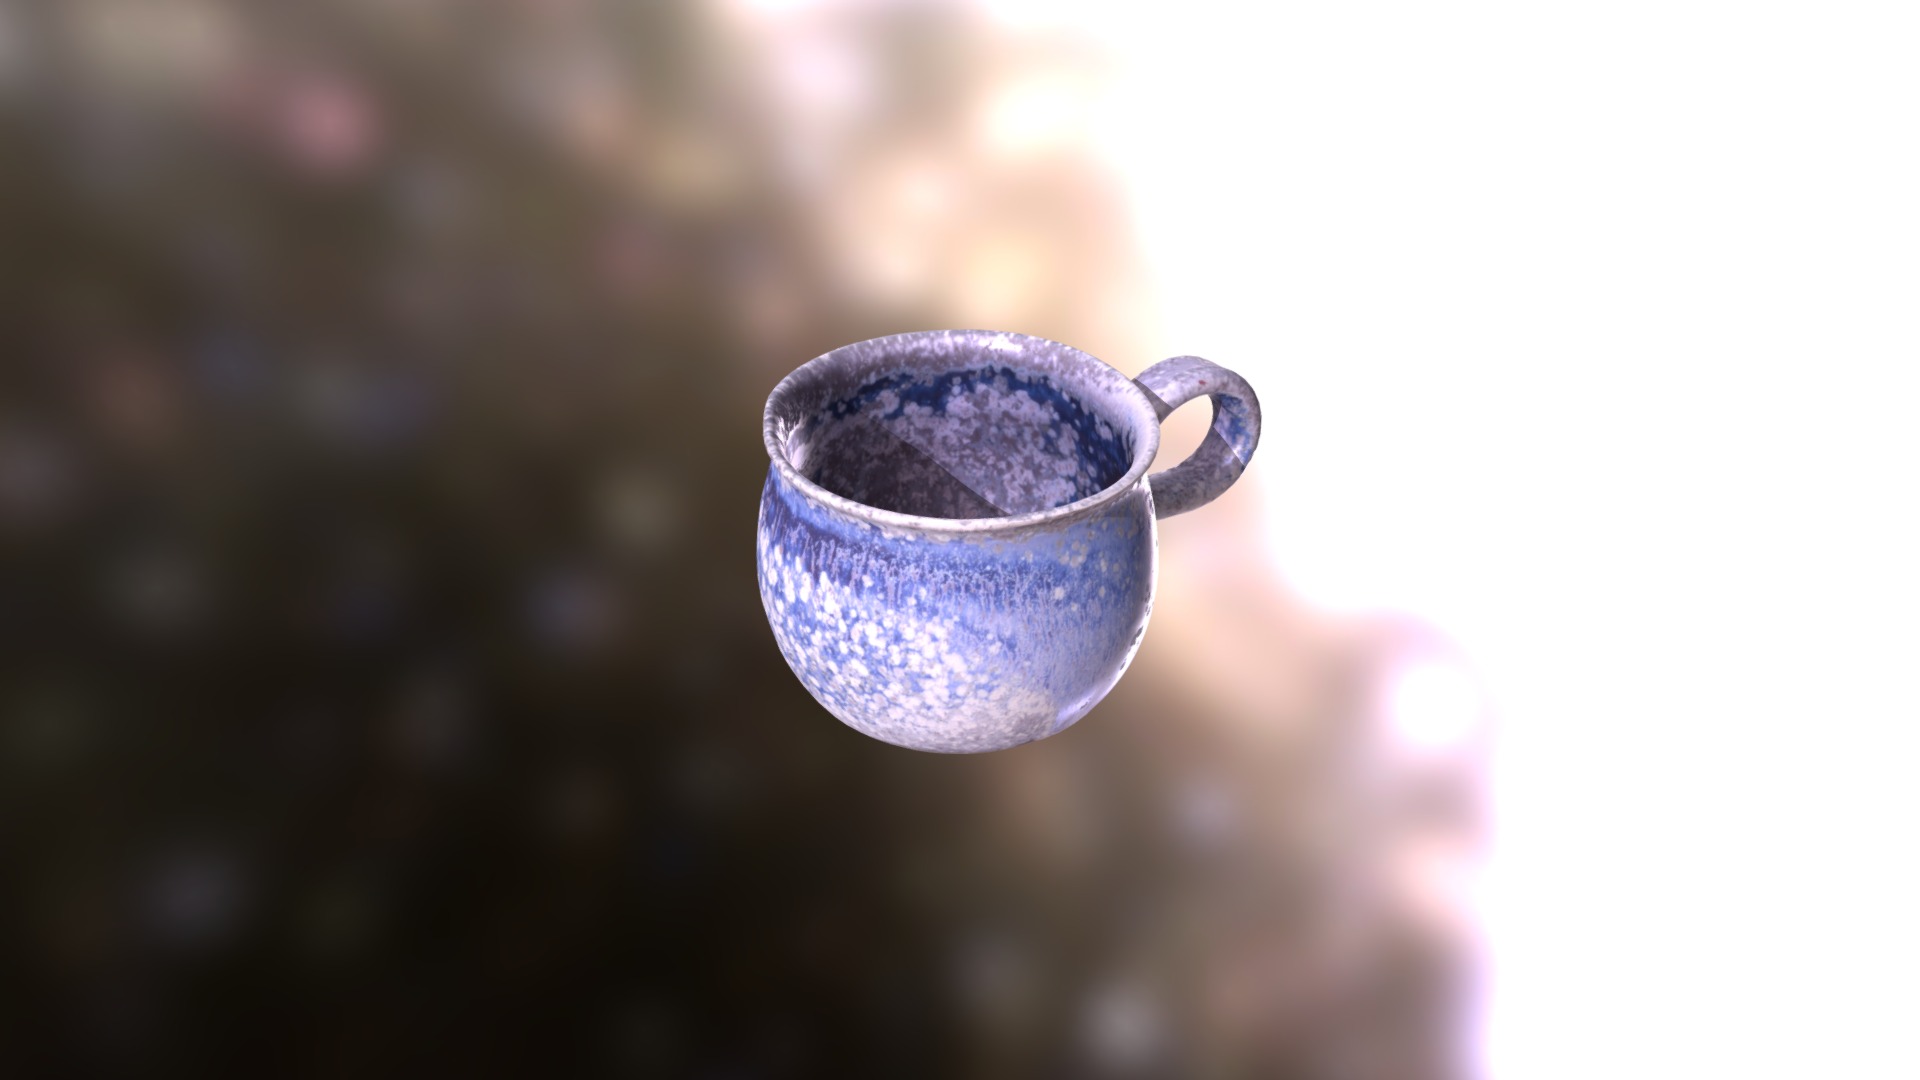 3D model Handmade Tea Cup from Sweden master - This is a 3D model of the Handmade Tea Cup from Sweden master. The 3D model is about a blue teapot with a handle.